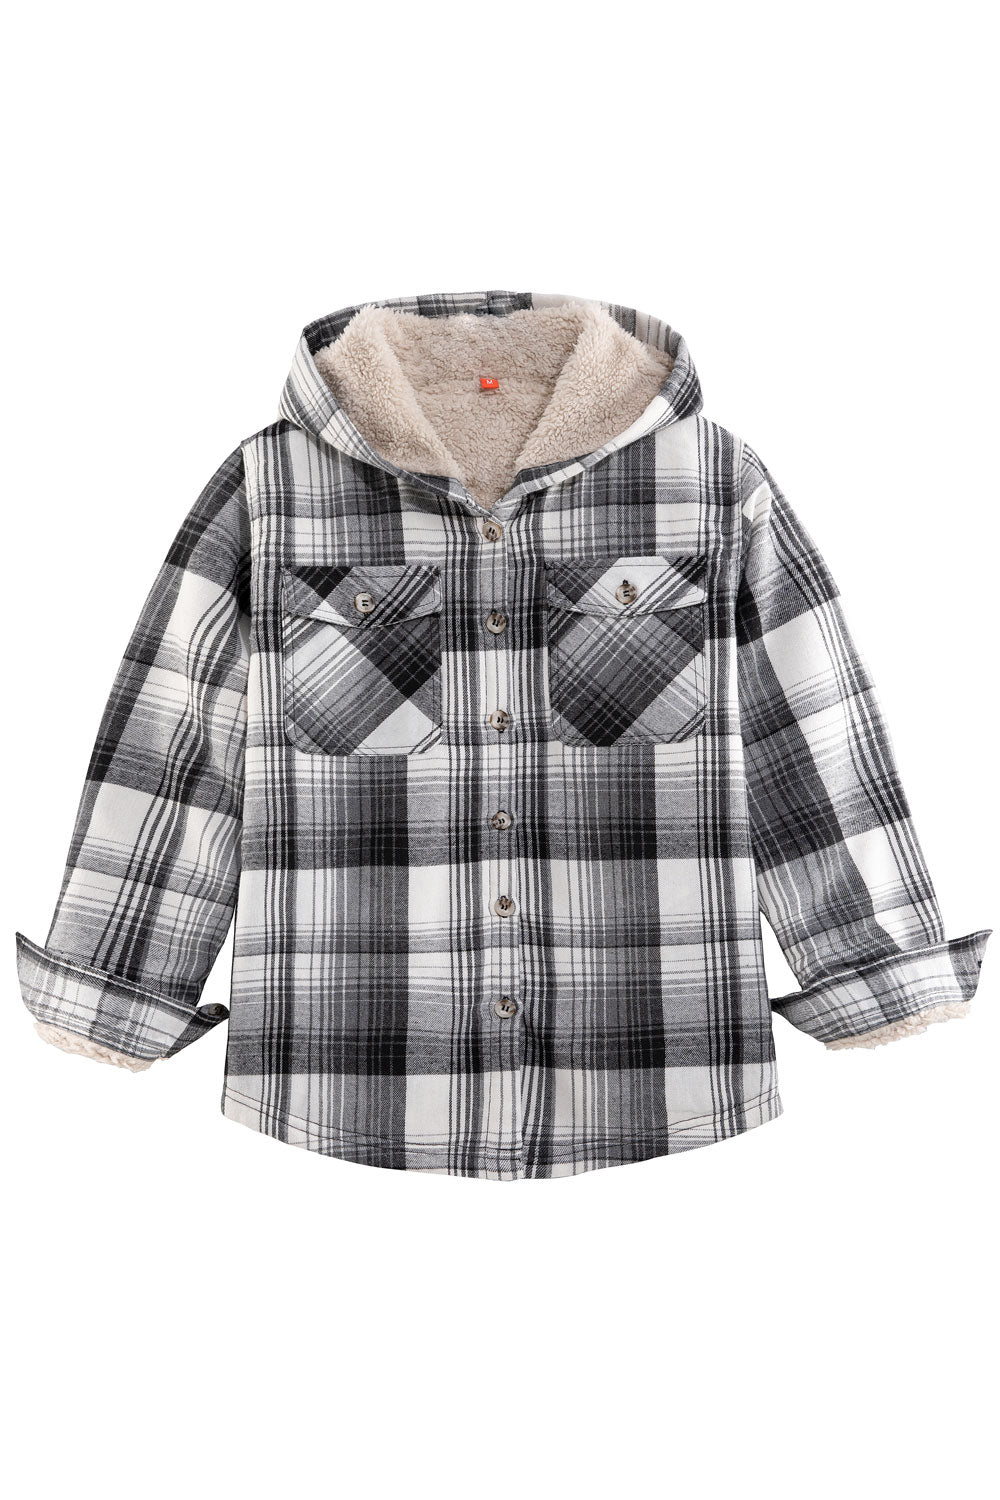 Boys Sherpa Lined Flannel Plaid Shirt Jacket,Hooded Flannel Jacket Kids